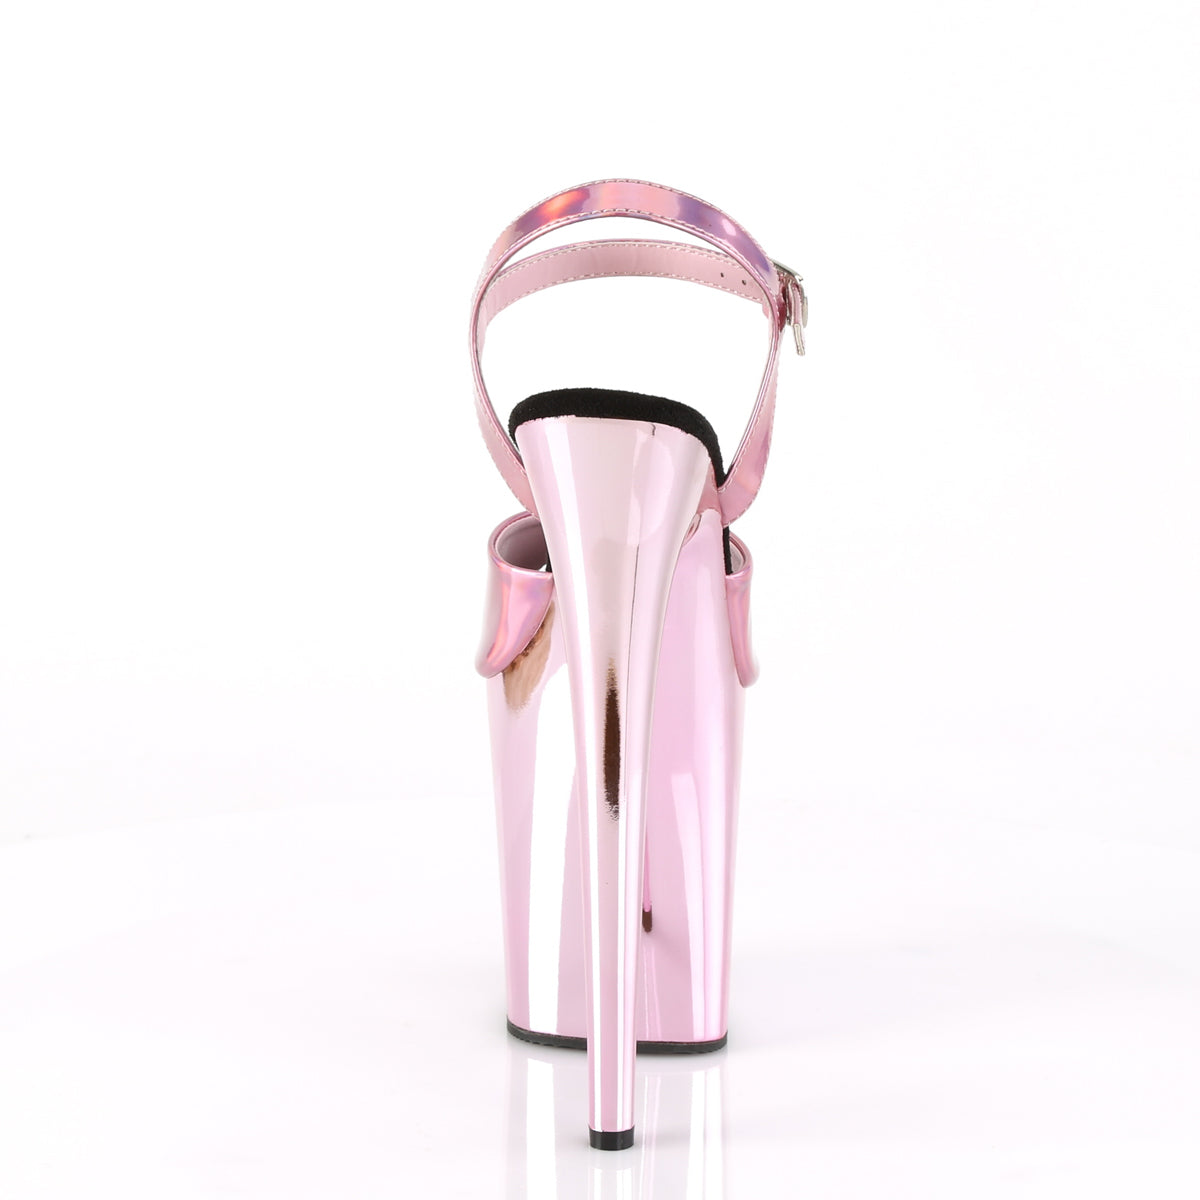 Pleaser Sandales pour femmes FLAMINGO-809hg B. hologramme rose / b. Chrome rose